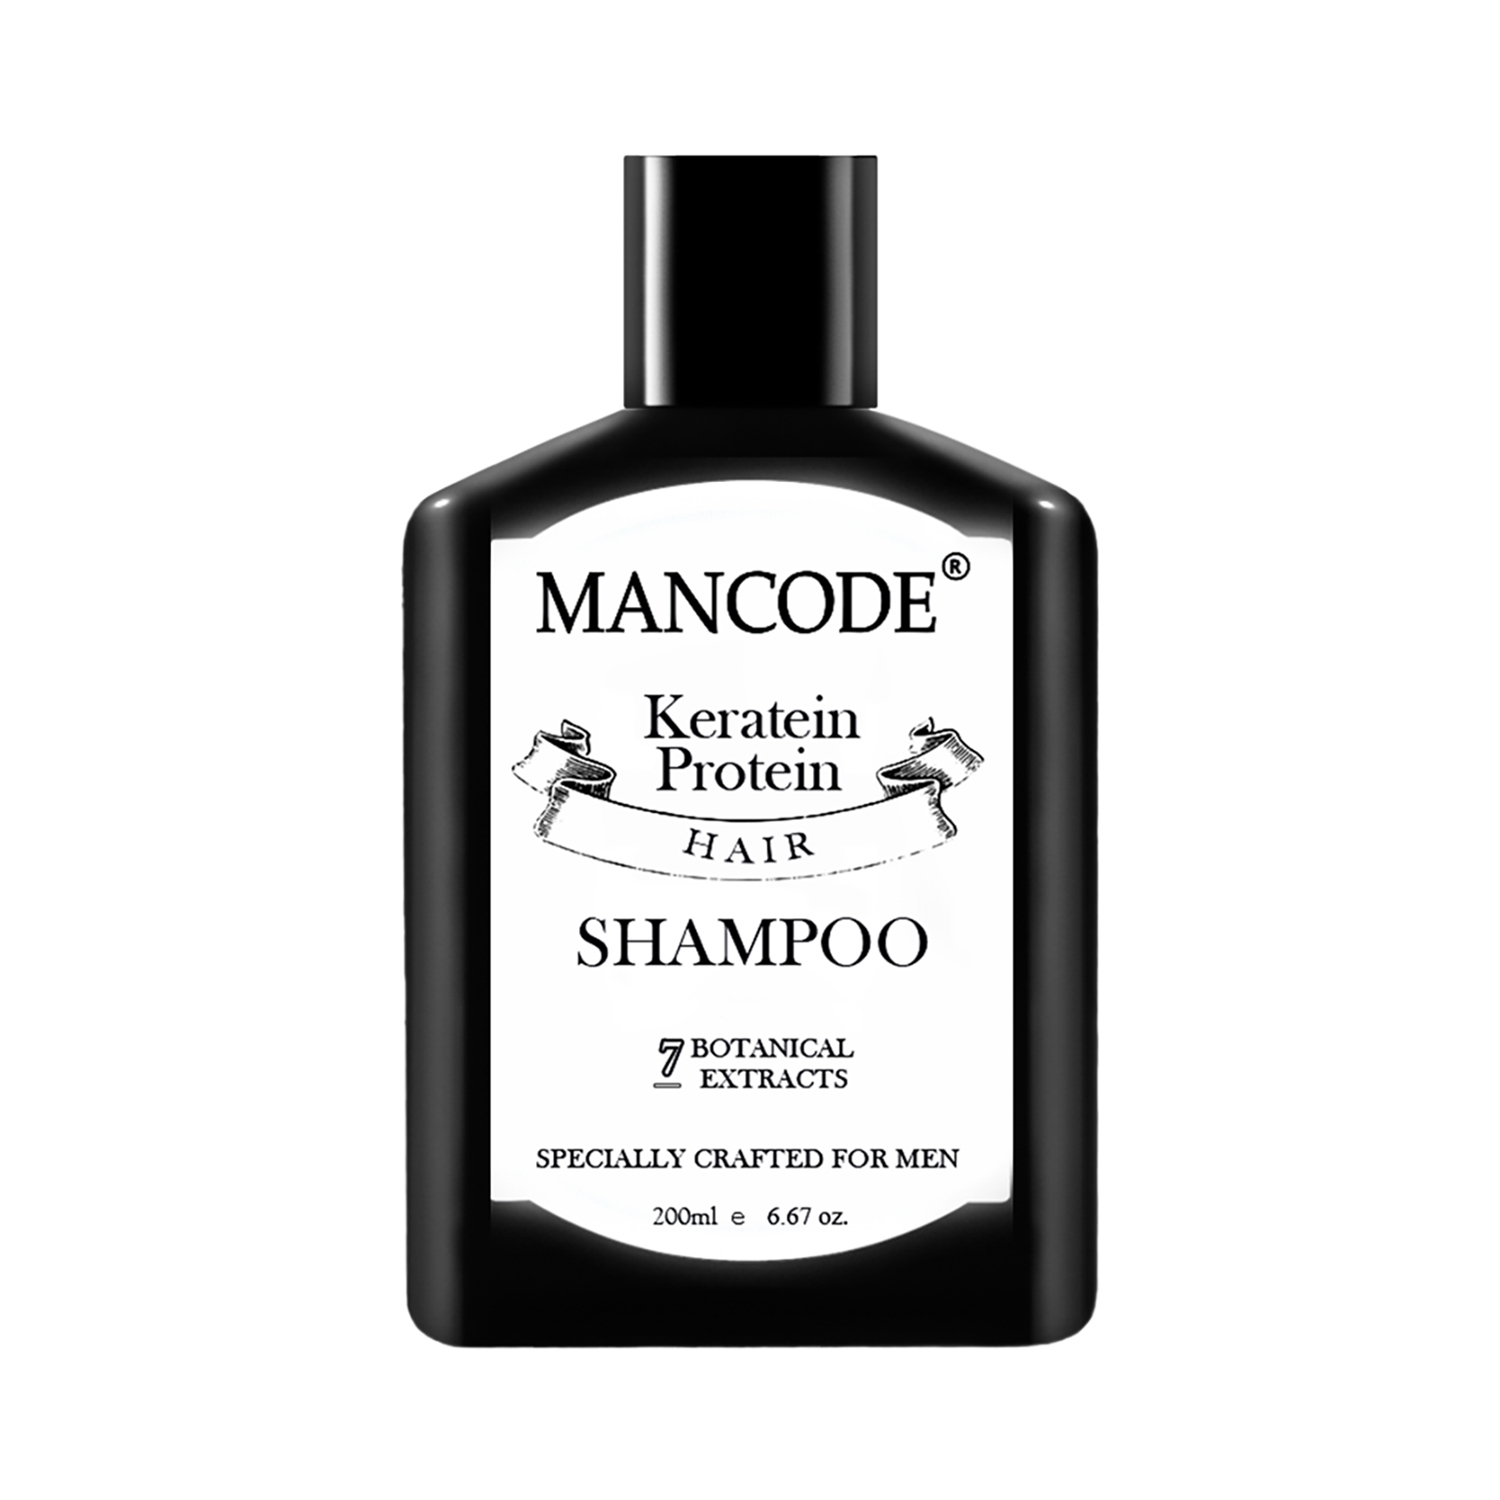 Mancode | Mancode Keratin Protein Hair Shampoo (200ml)